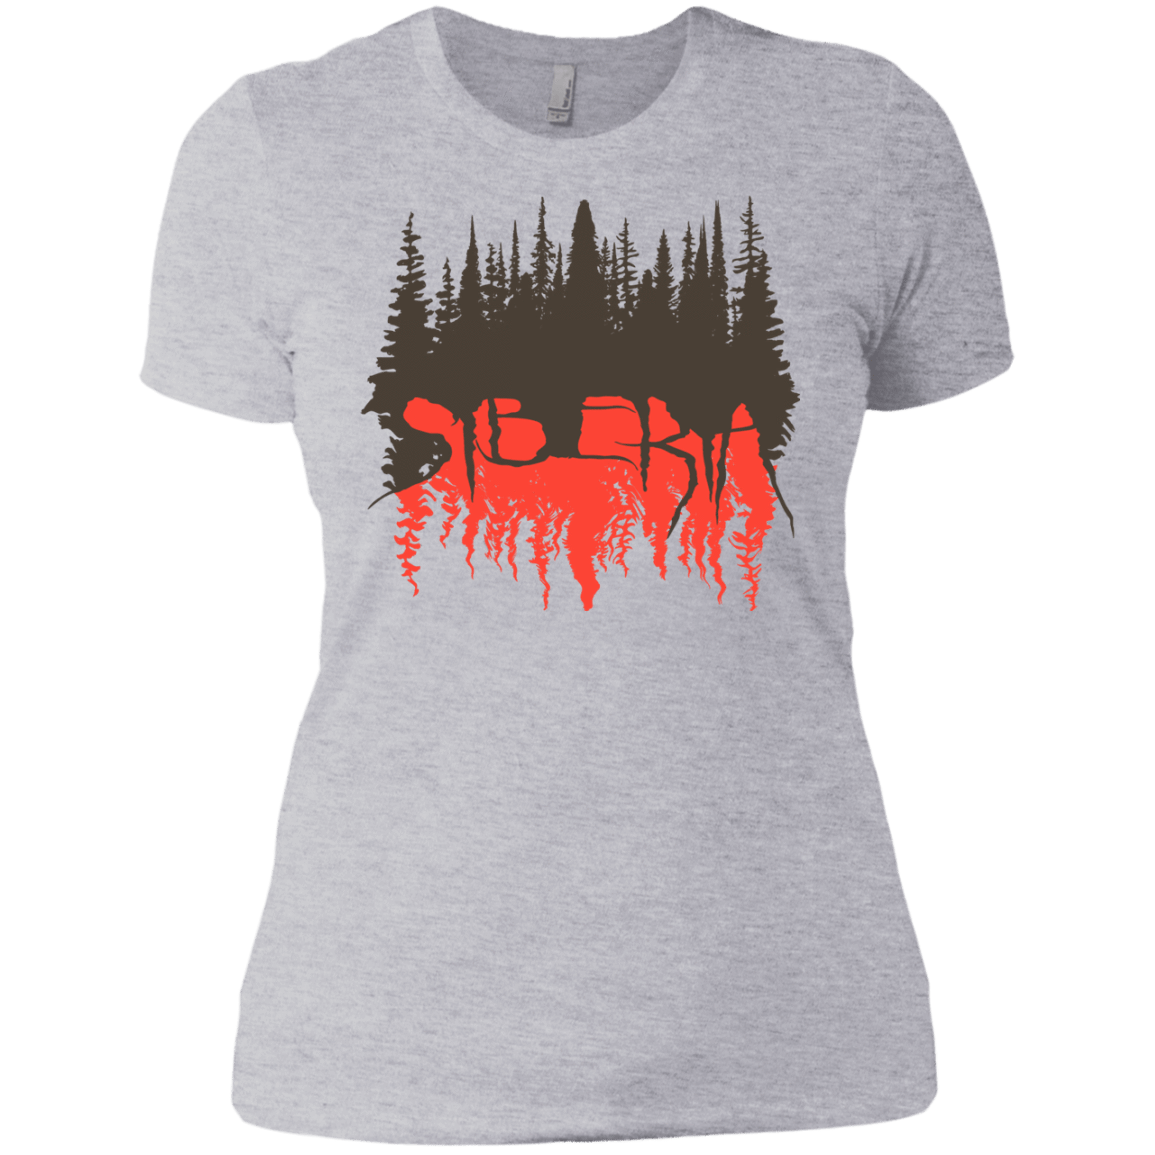 T-Shirts Heather Grey / X-Small Siberia Wilderness Women's Premium T-Shirt